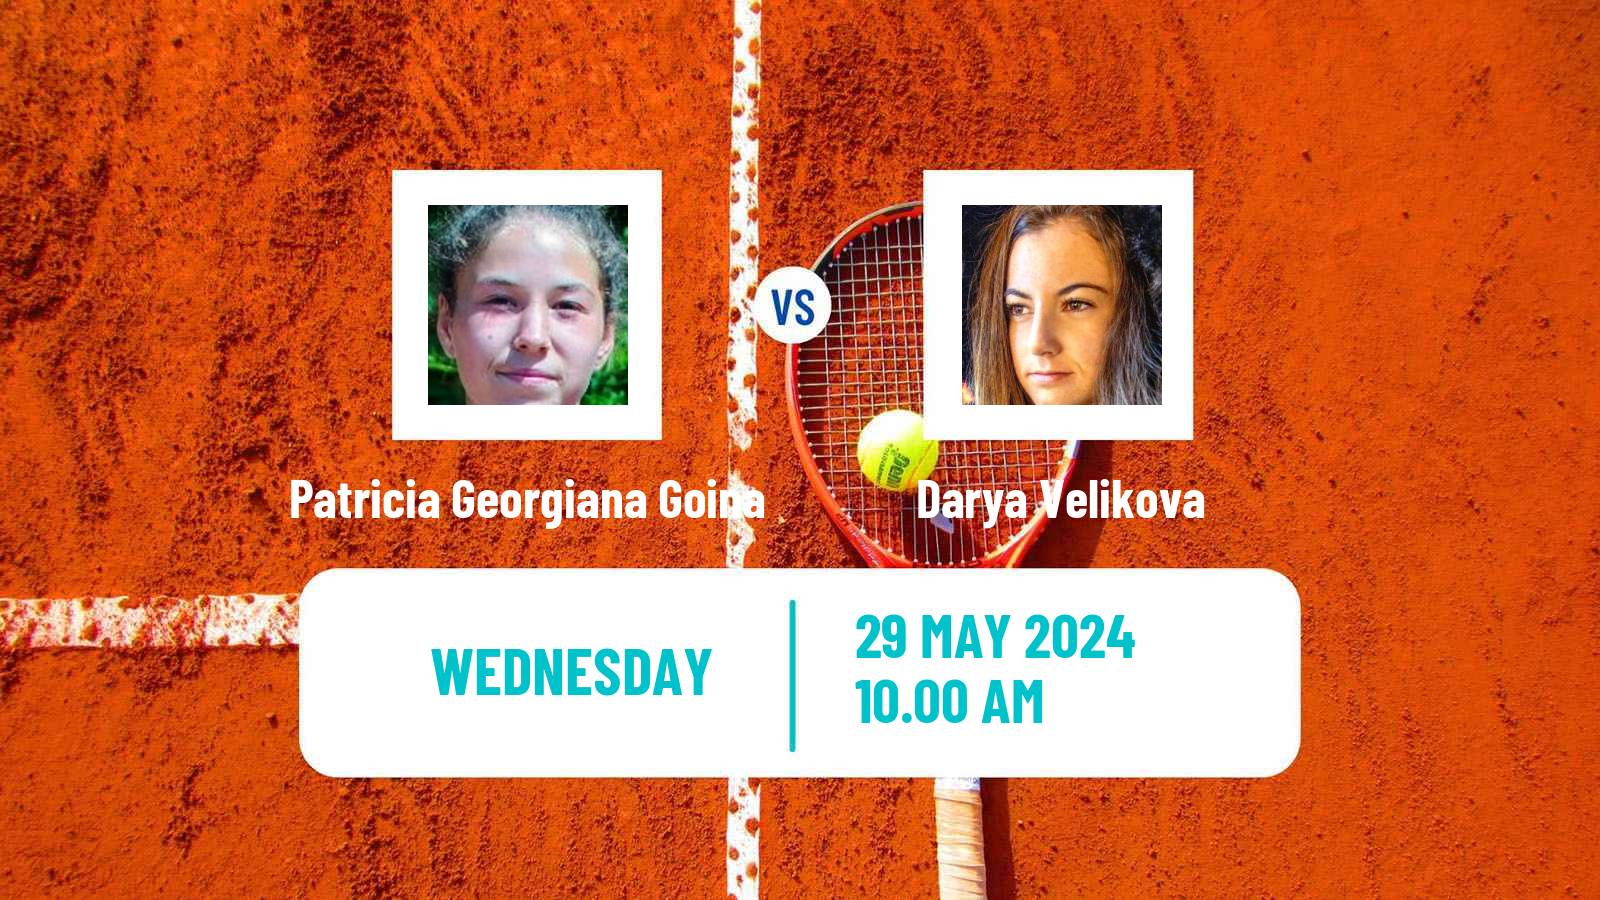 Tennis ITF W15 Kursumlijska Banja 6 Women Patricia Georgiana Goina - Darya Velikova